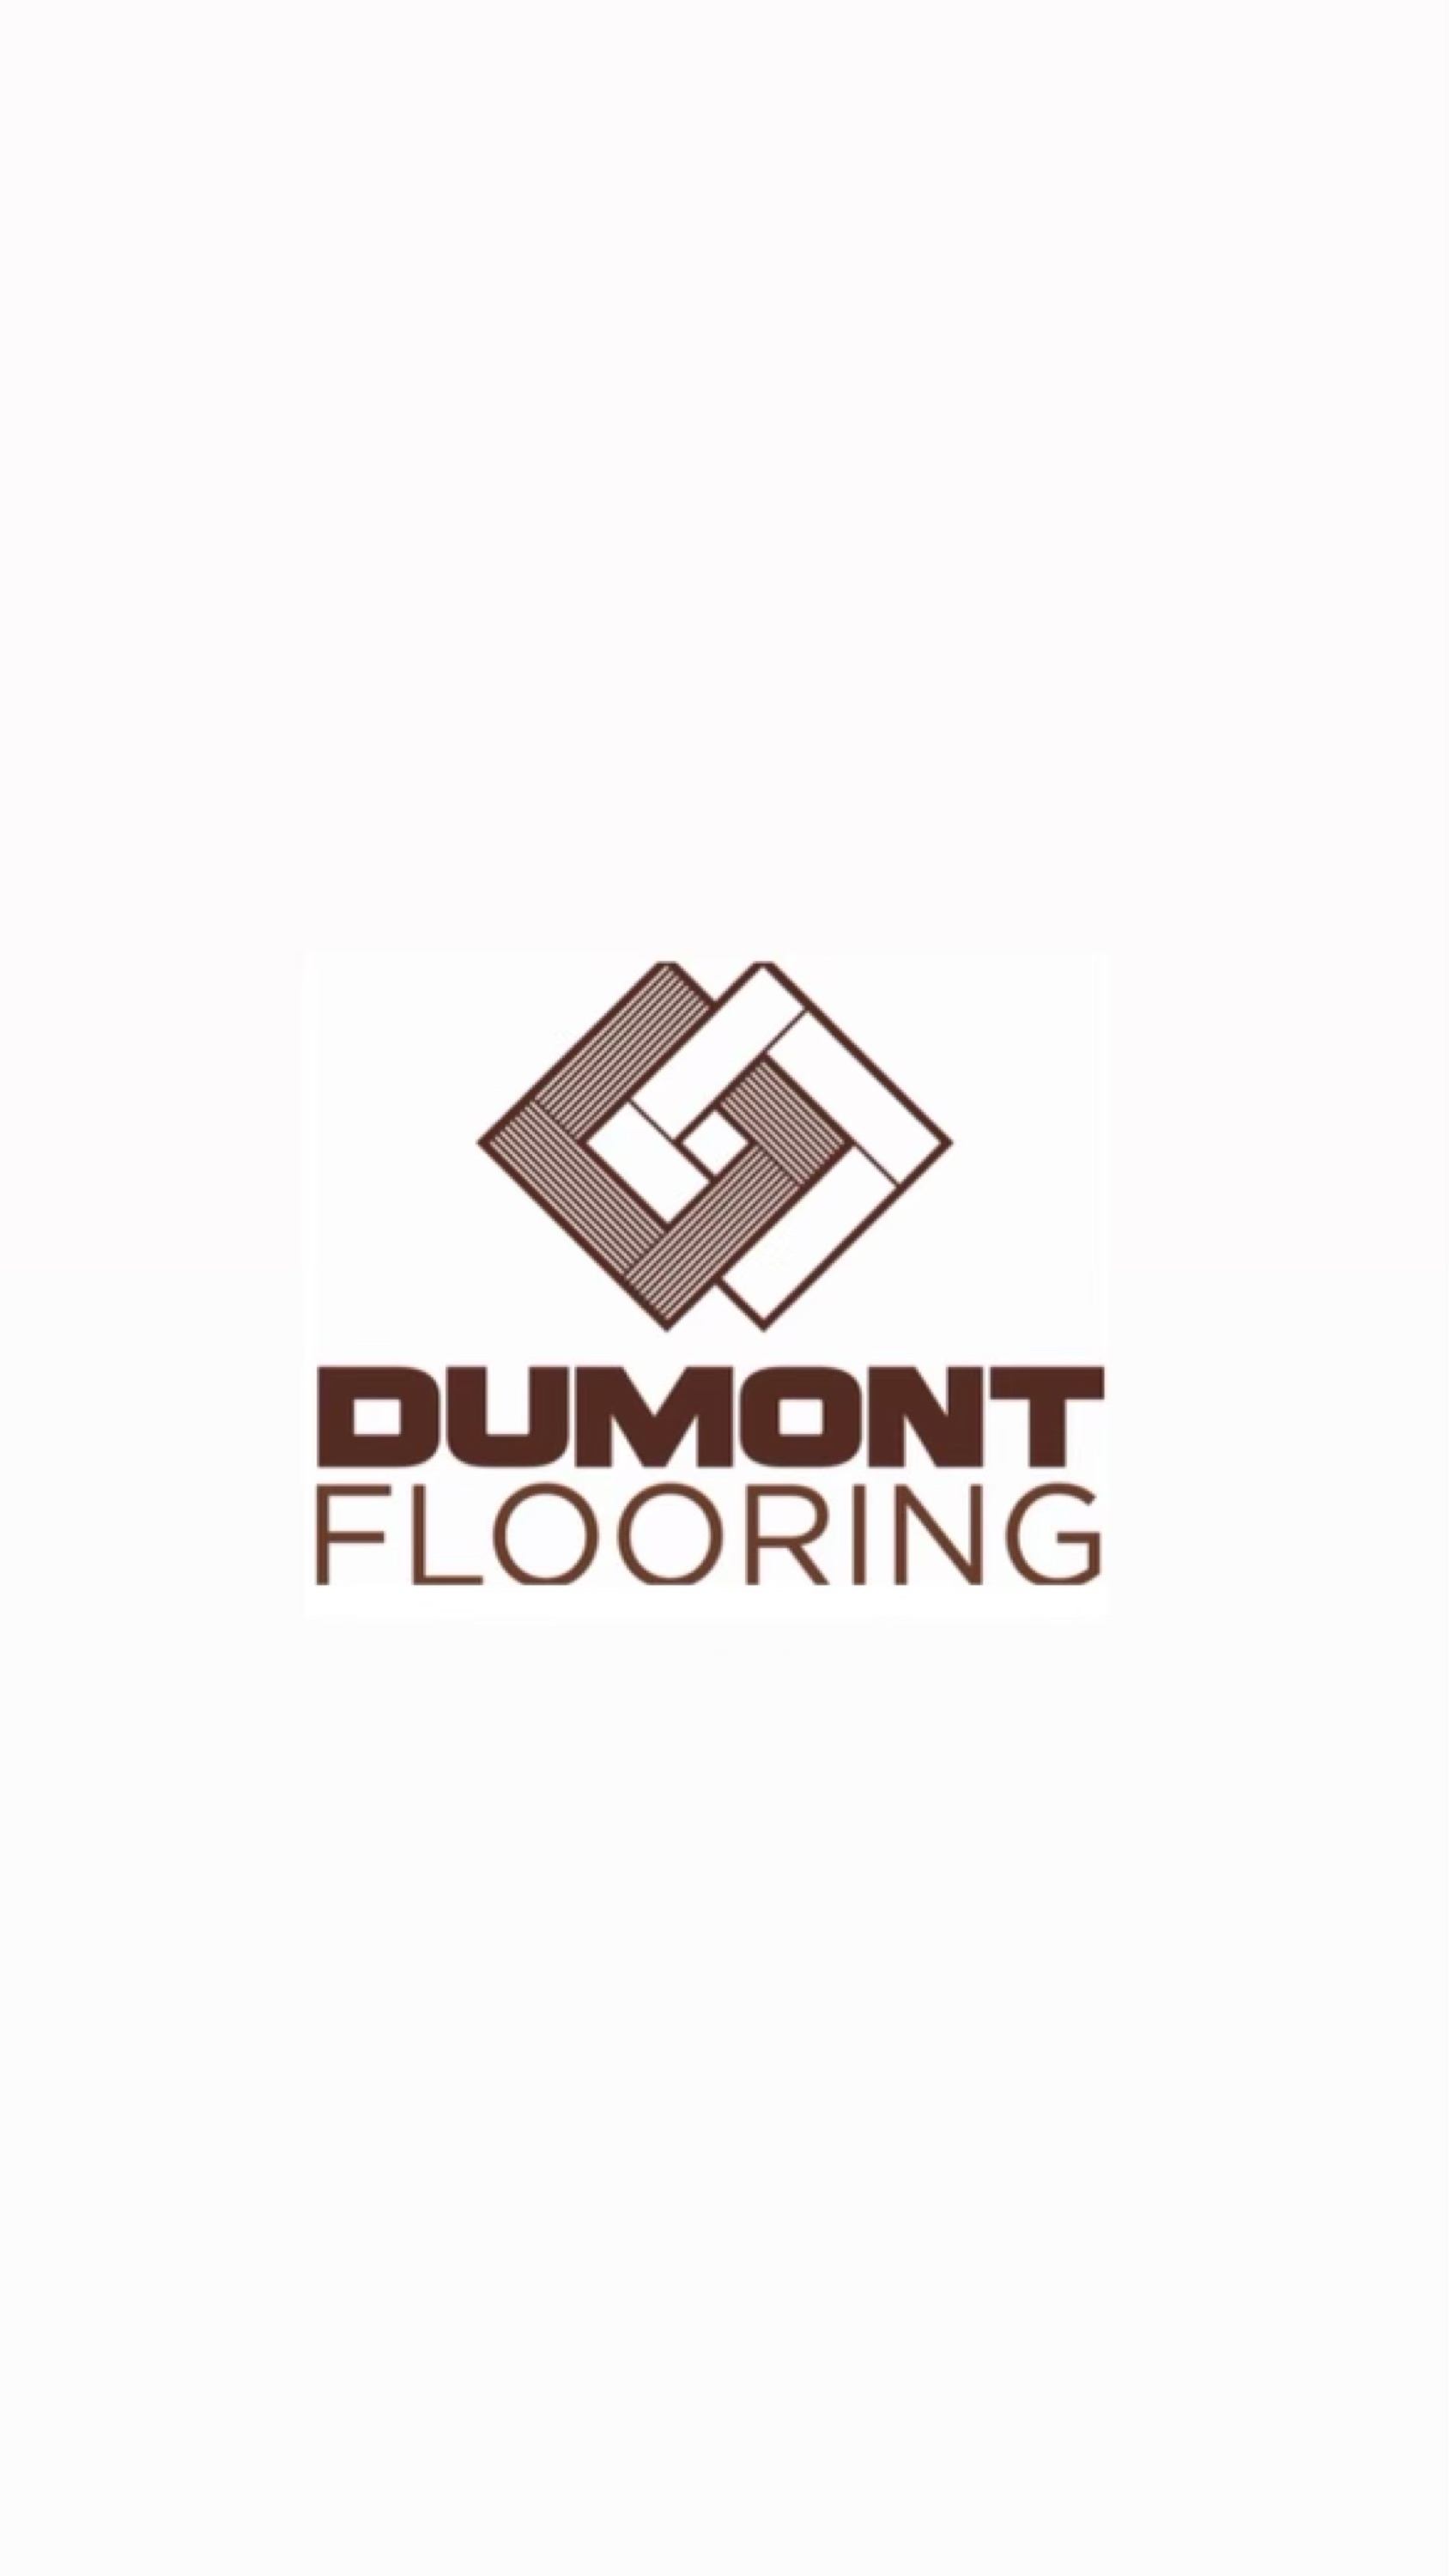 Dumont Flooring Logo